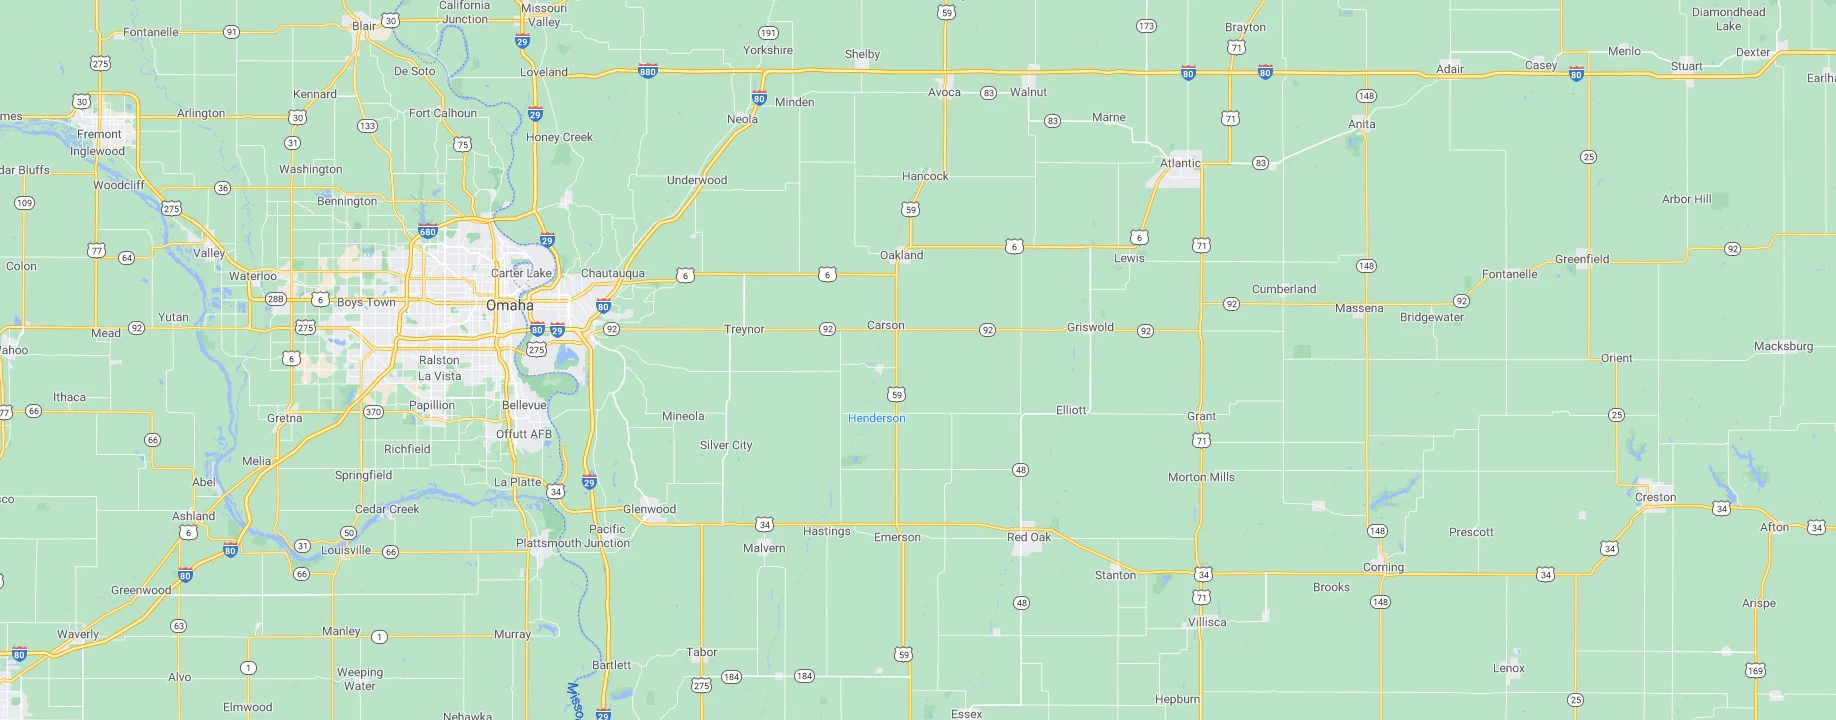 Groundscapes, Inc. service areas map background of Omaha, Nebraska.